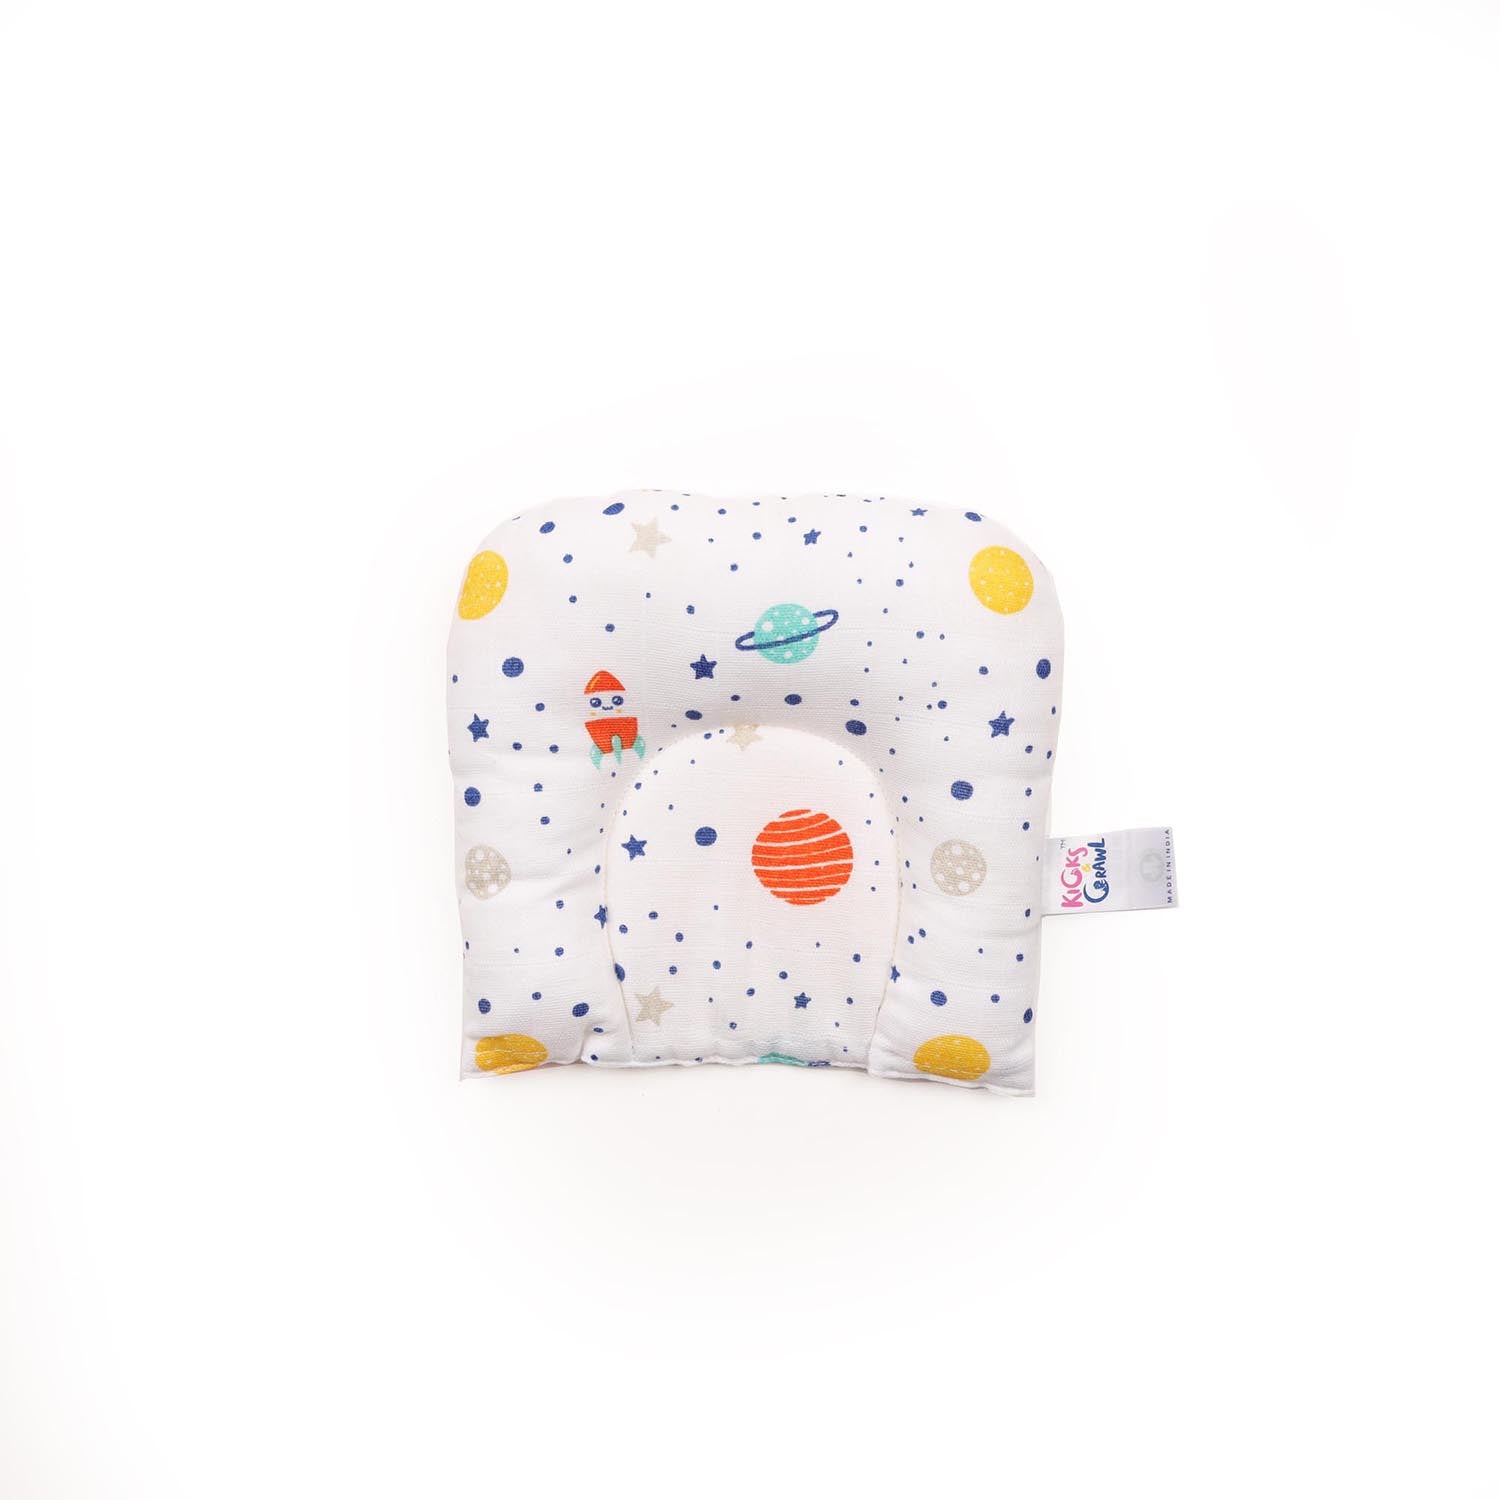 Kicks & Crawl - Space Explorer Organic Baby Pillow